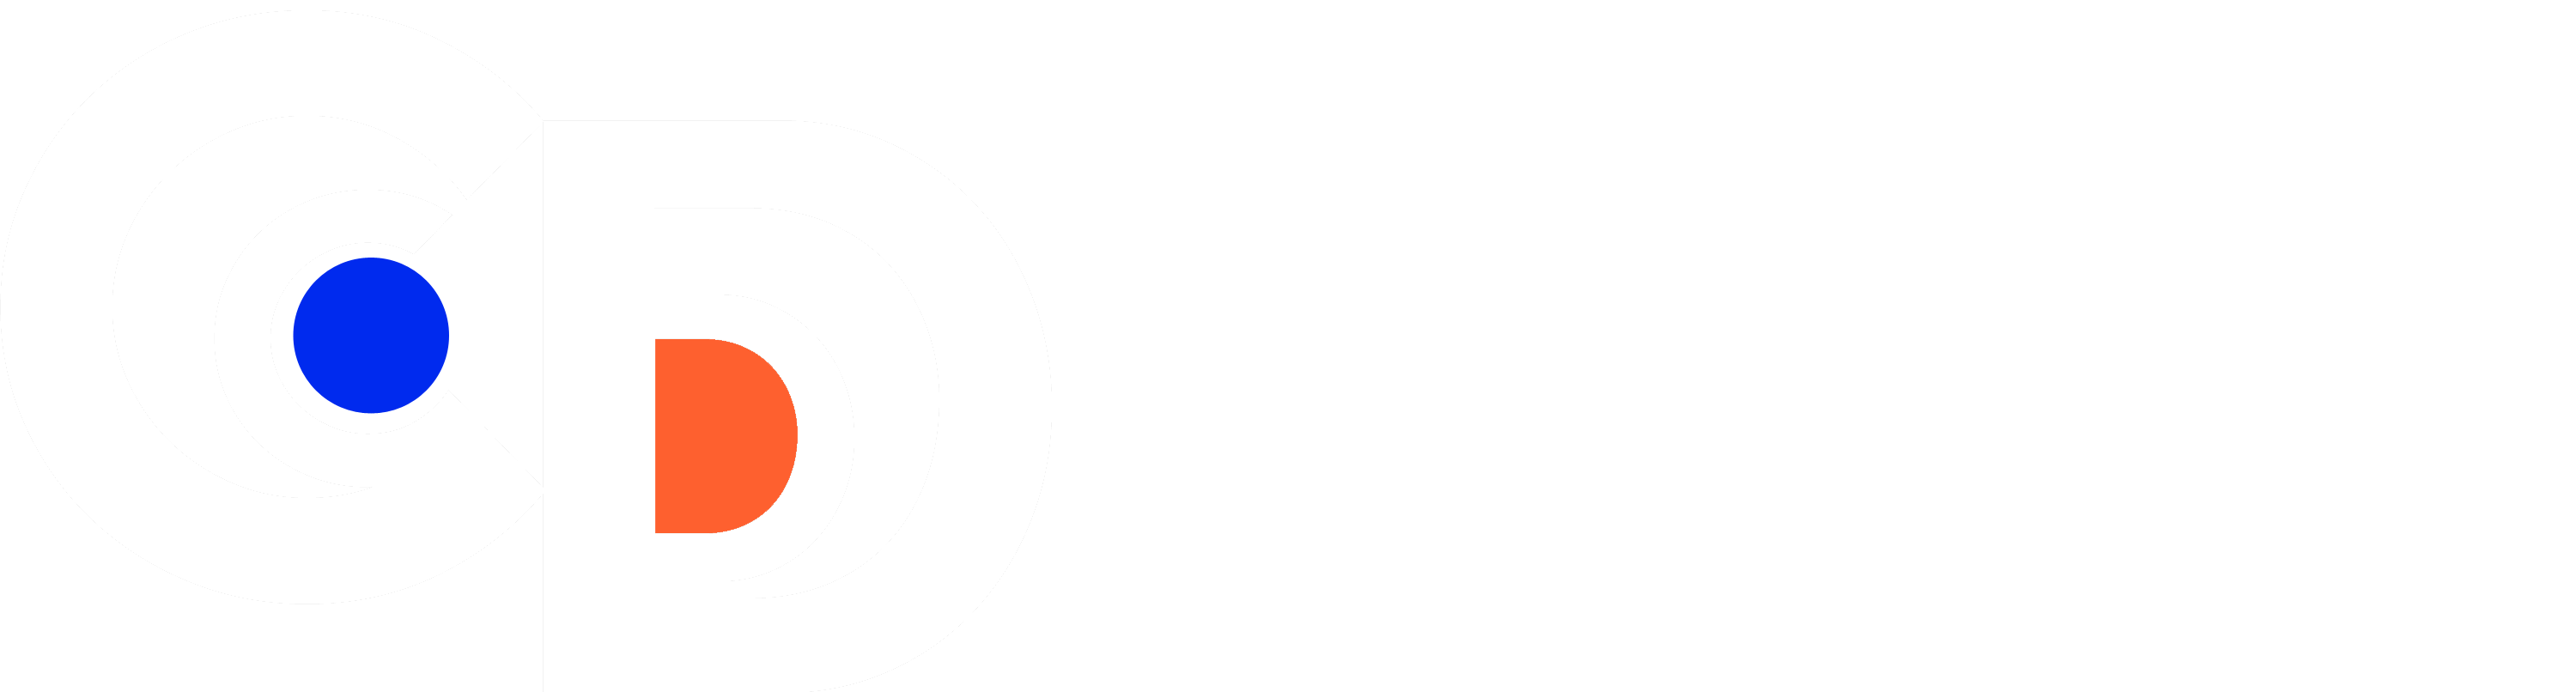 Chu & Dohn Associates